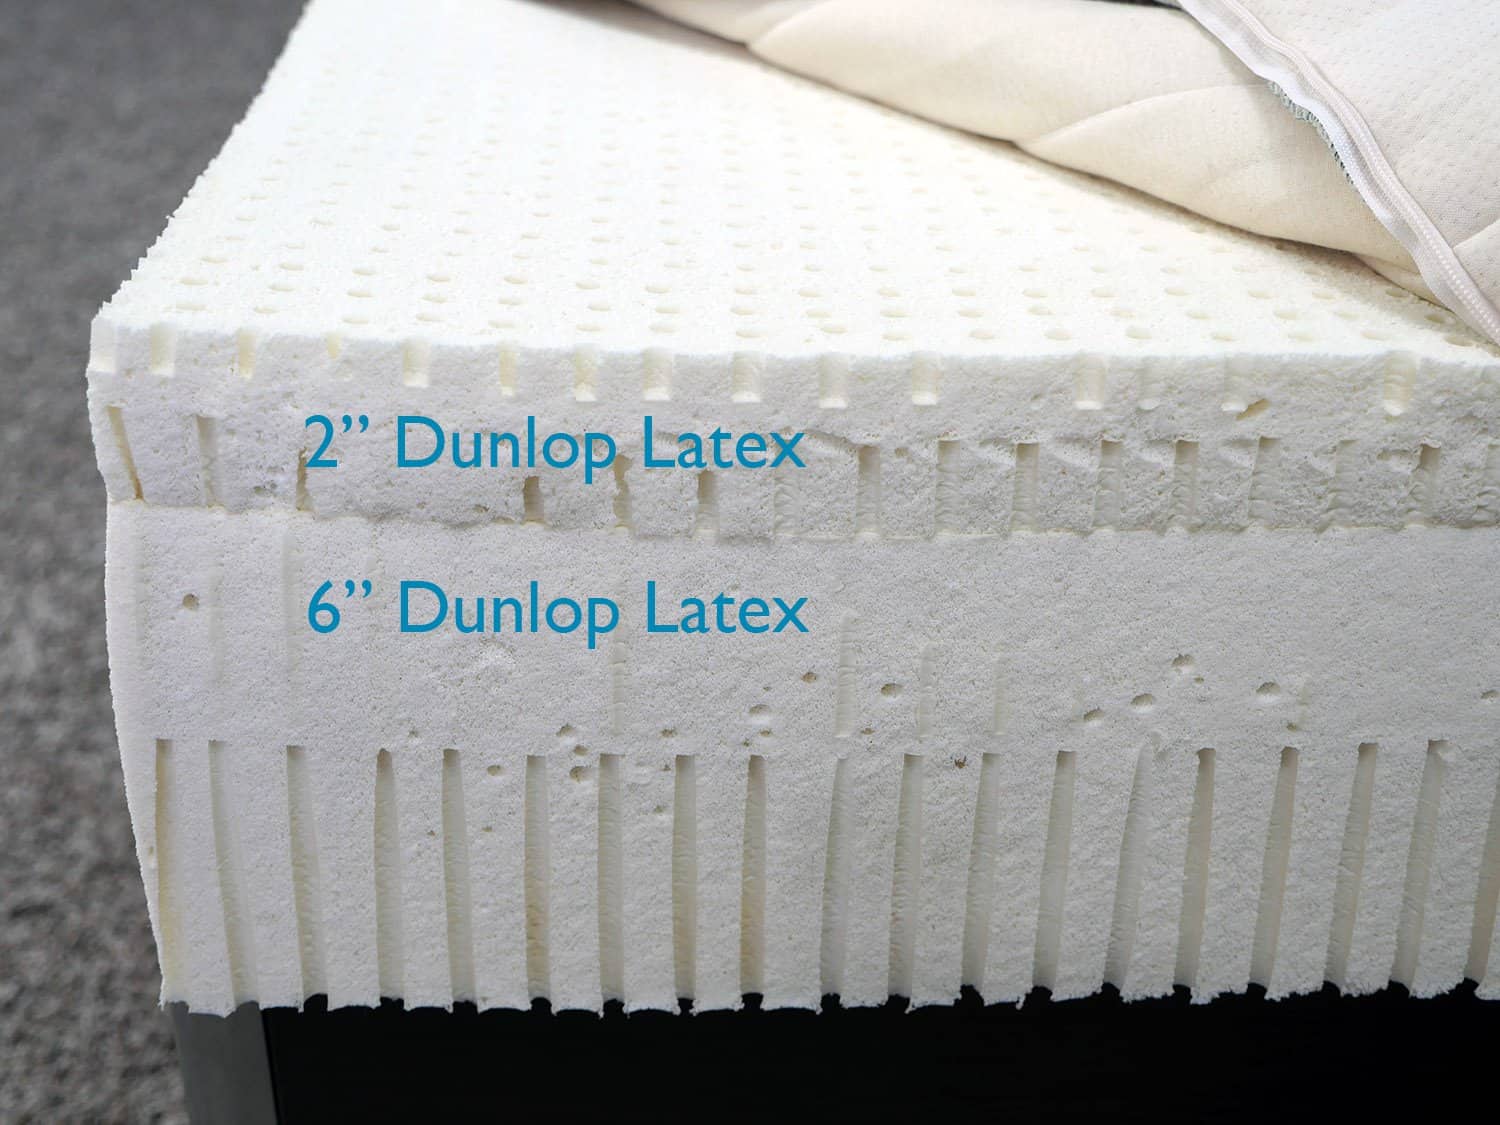 foam or latex mattress reviews